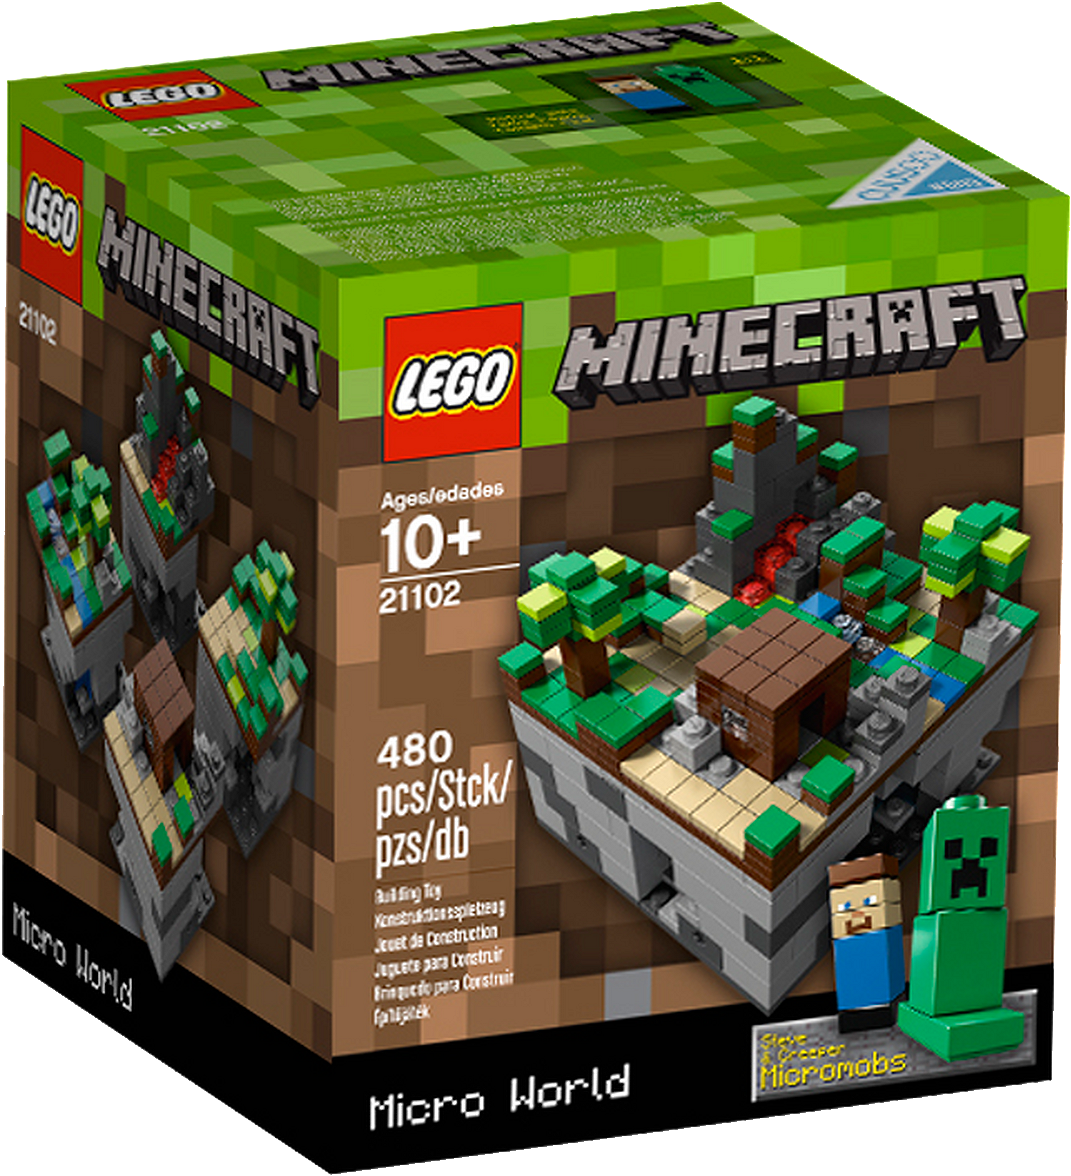 Minecraft Walmart Lego Sets